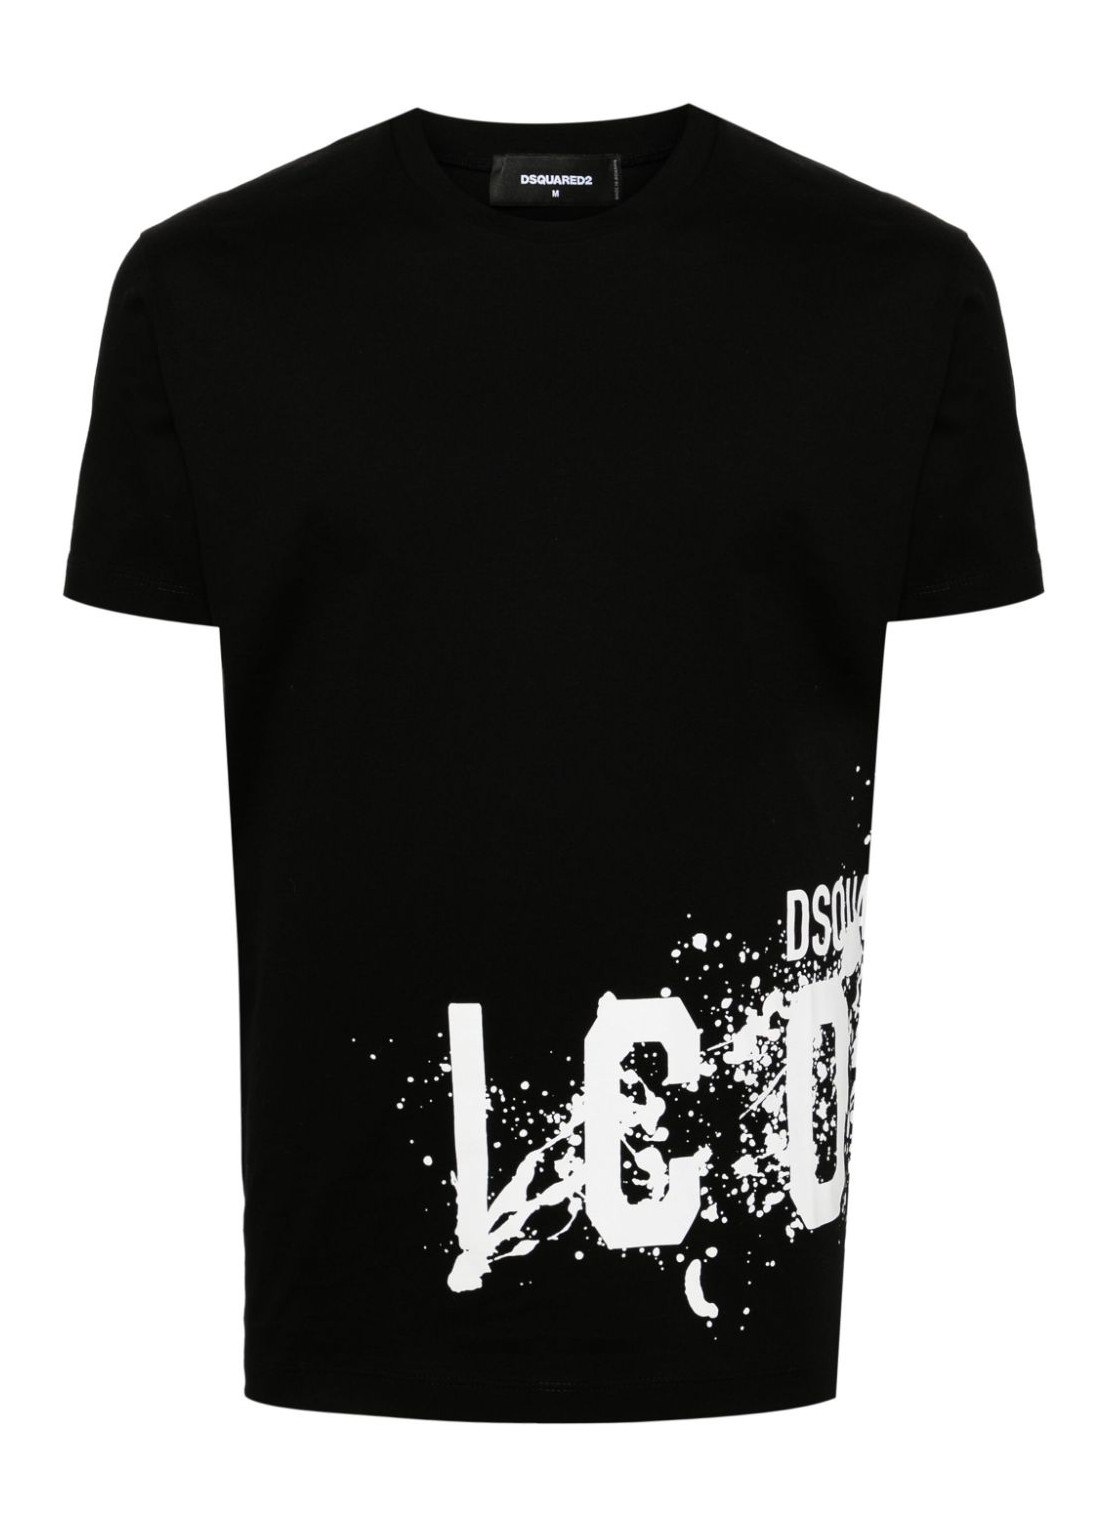 Camiseta dsquared t-shirt man icon splash cool fit tee s79gc0086s23009 900 talla S
 